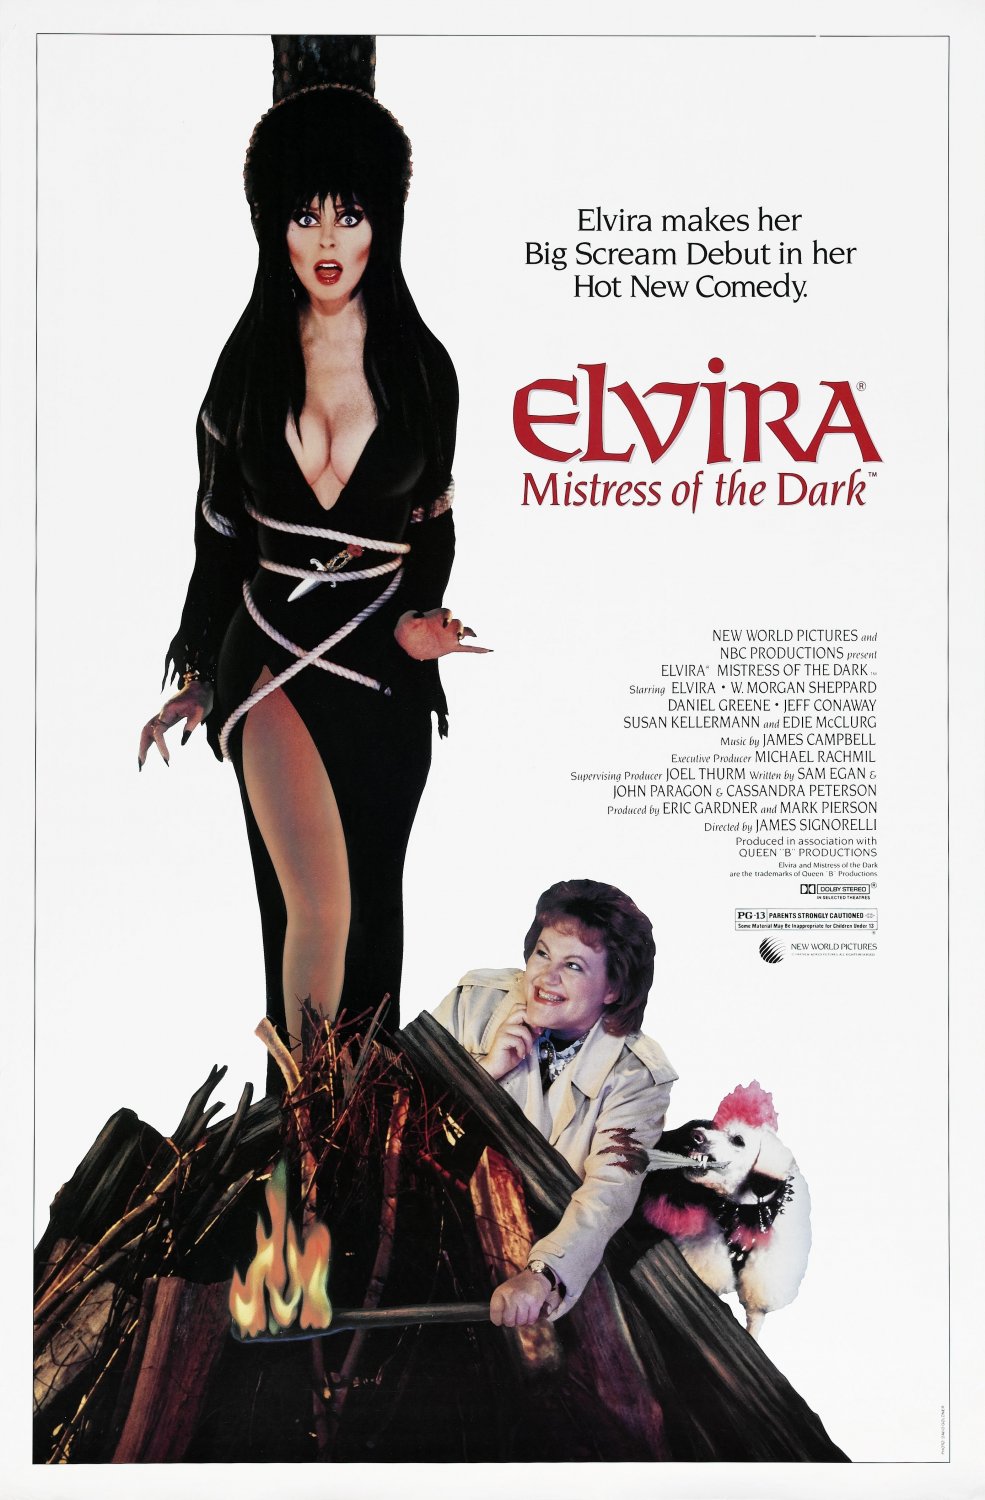 Elvira Movie Poster 13x19 inches